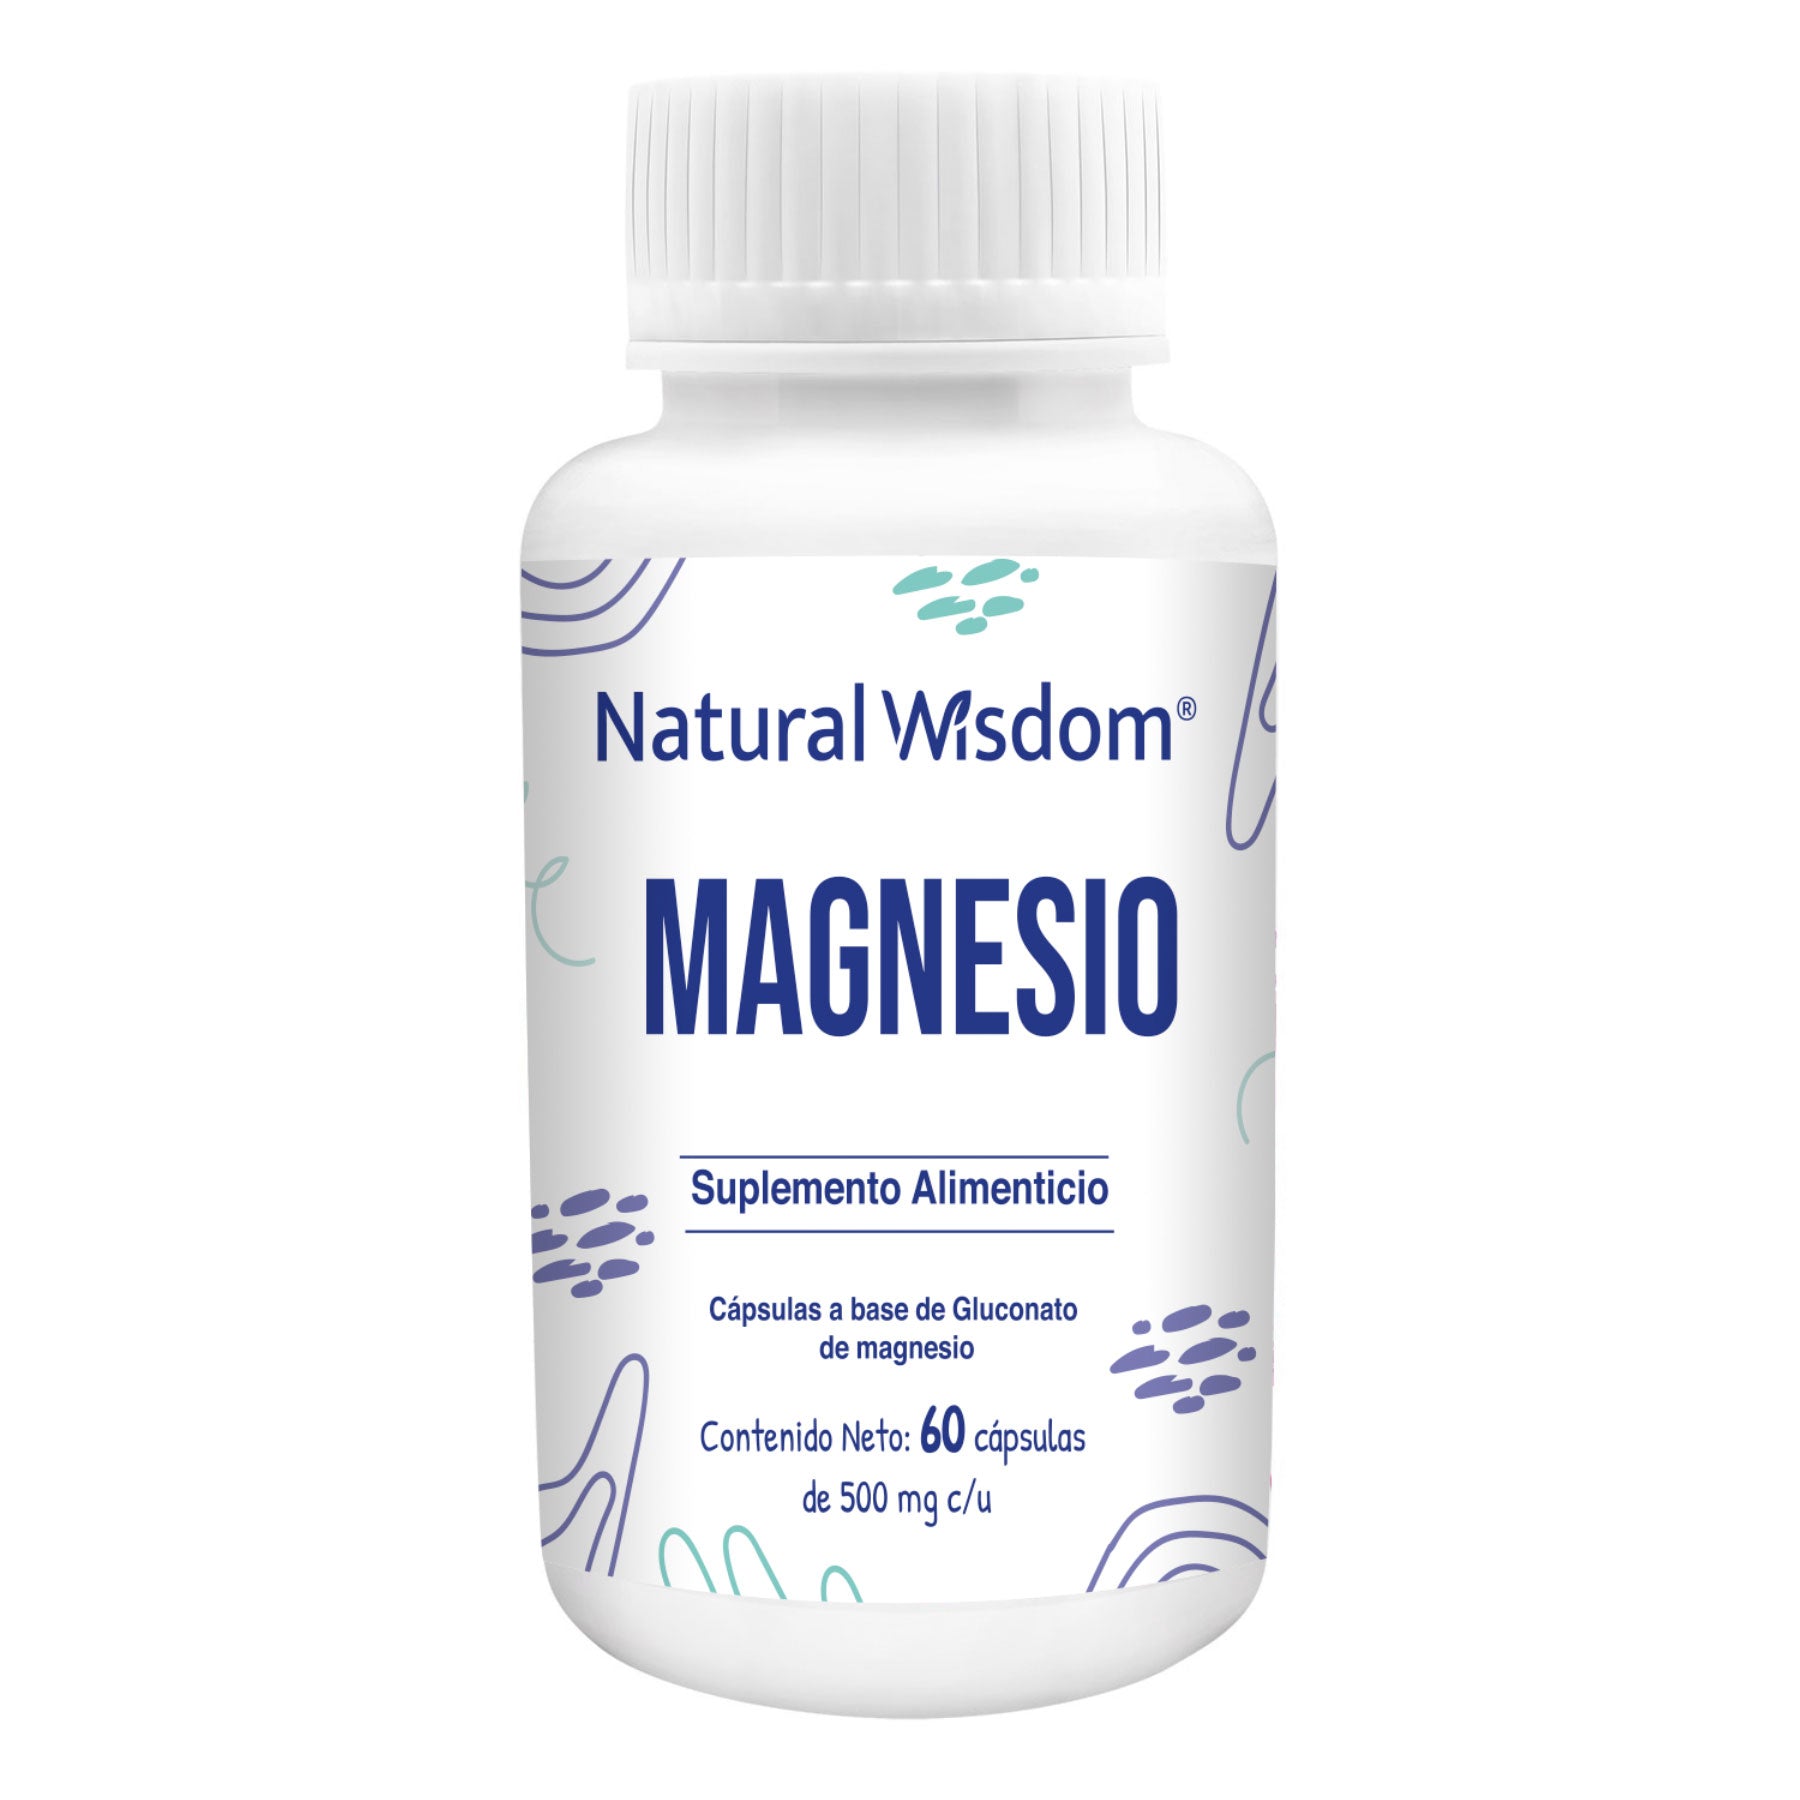 Magnesio 60 Cápsulas | Suplemento Alimenticio | Natural Wisdom®